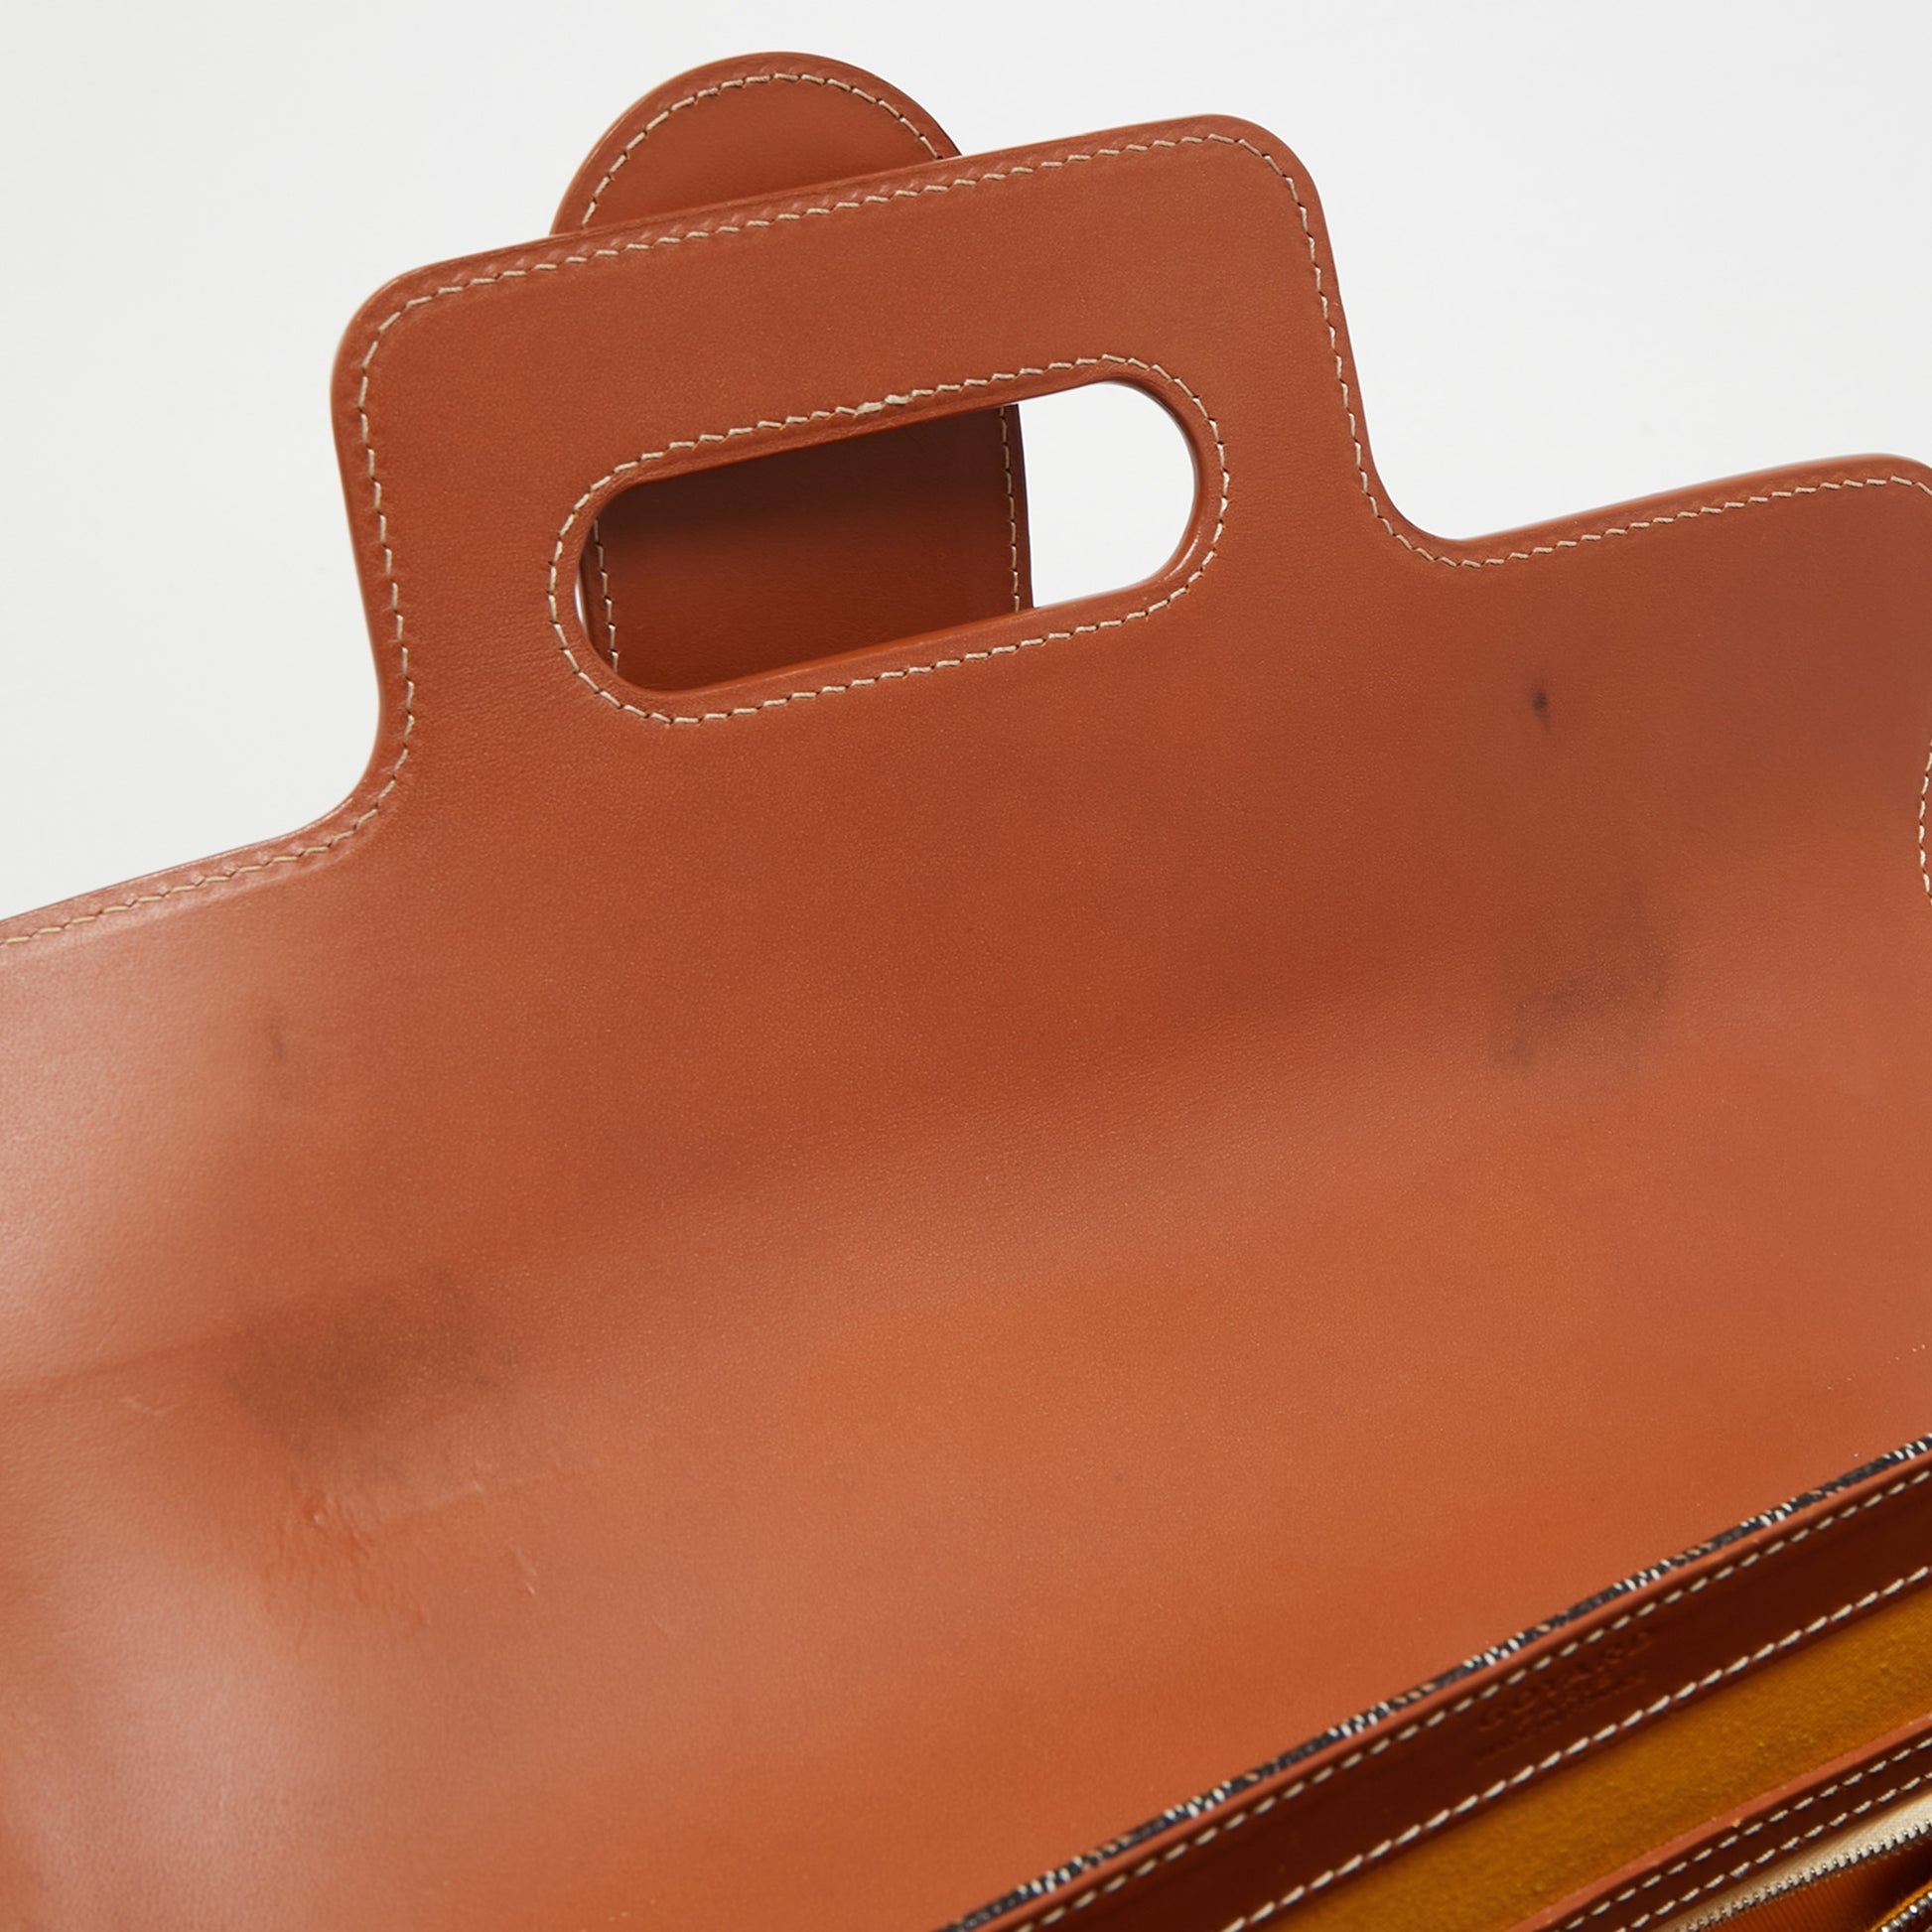 Goyard Brown/Cognac Coated Canvas and Leather Saigon Top Handle Bag